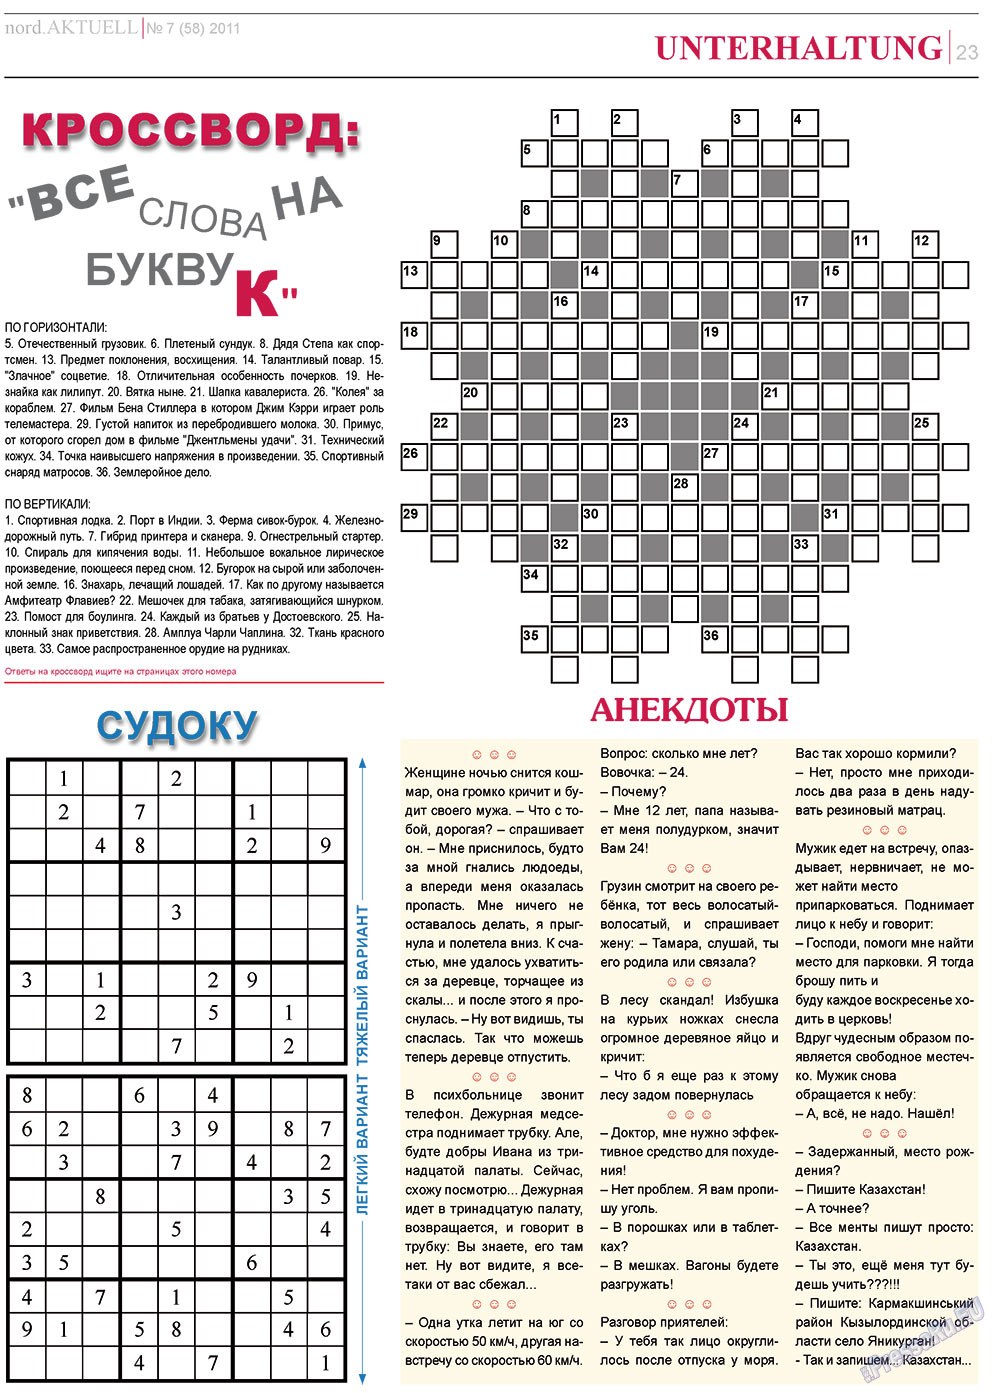 nord.Aktuell, газета. 2011 №7 стр.23